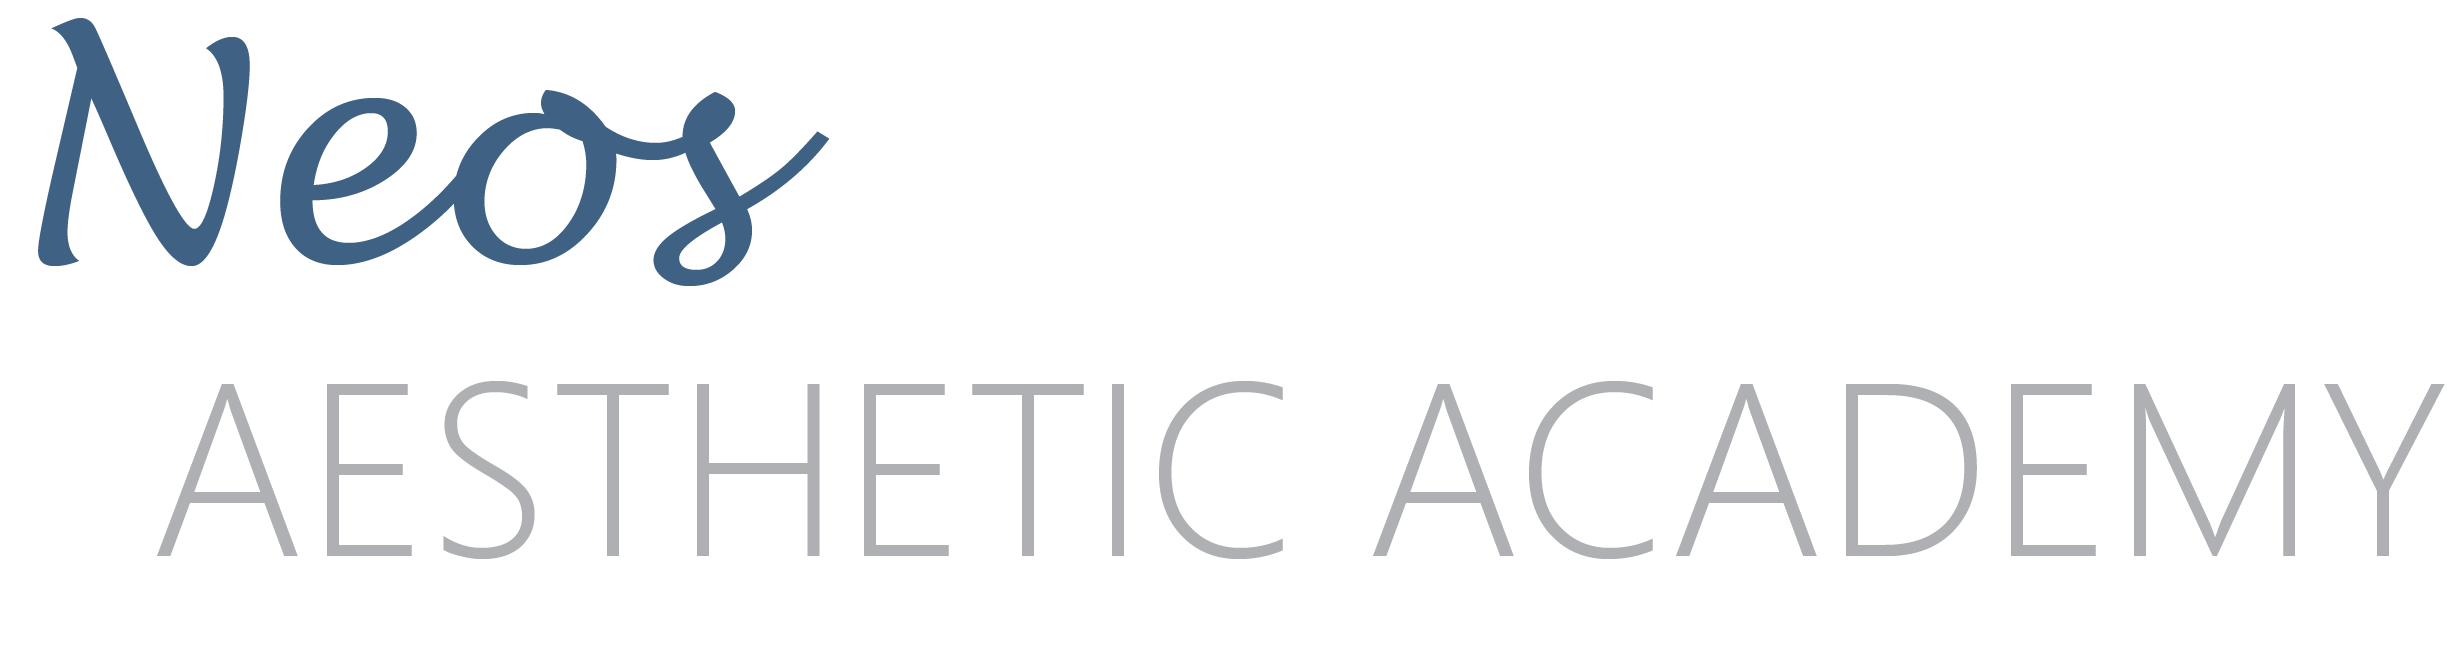 Logo of Neos Aesthetic Academy in Salt Lake City, Utah